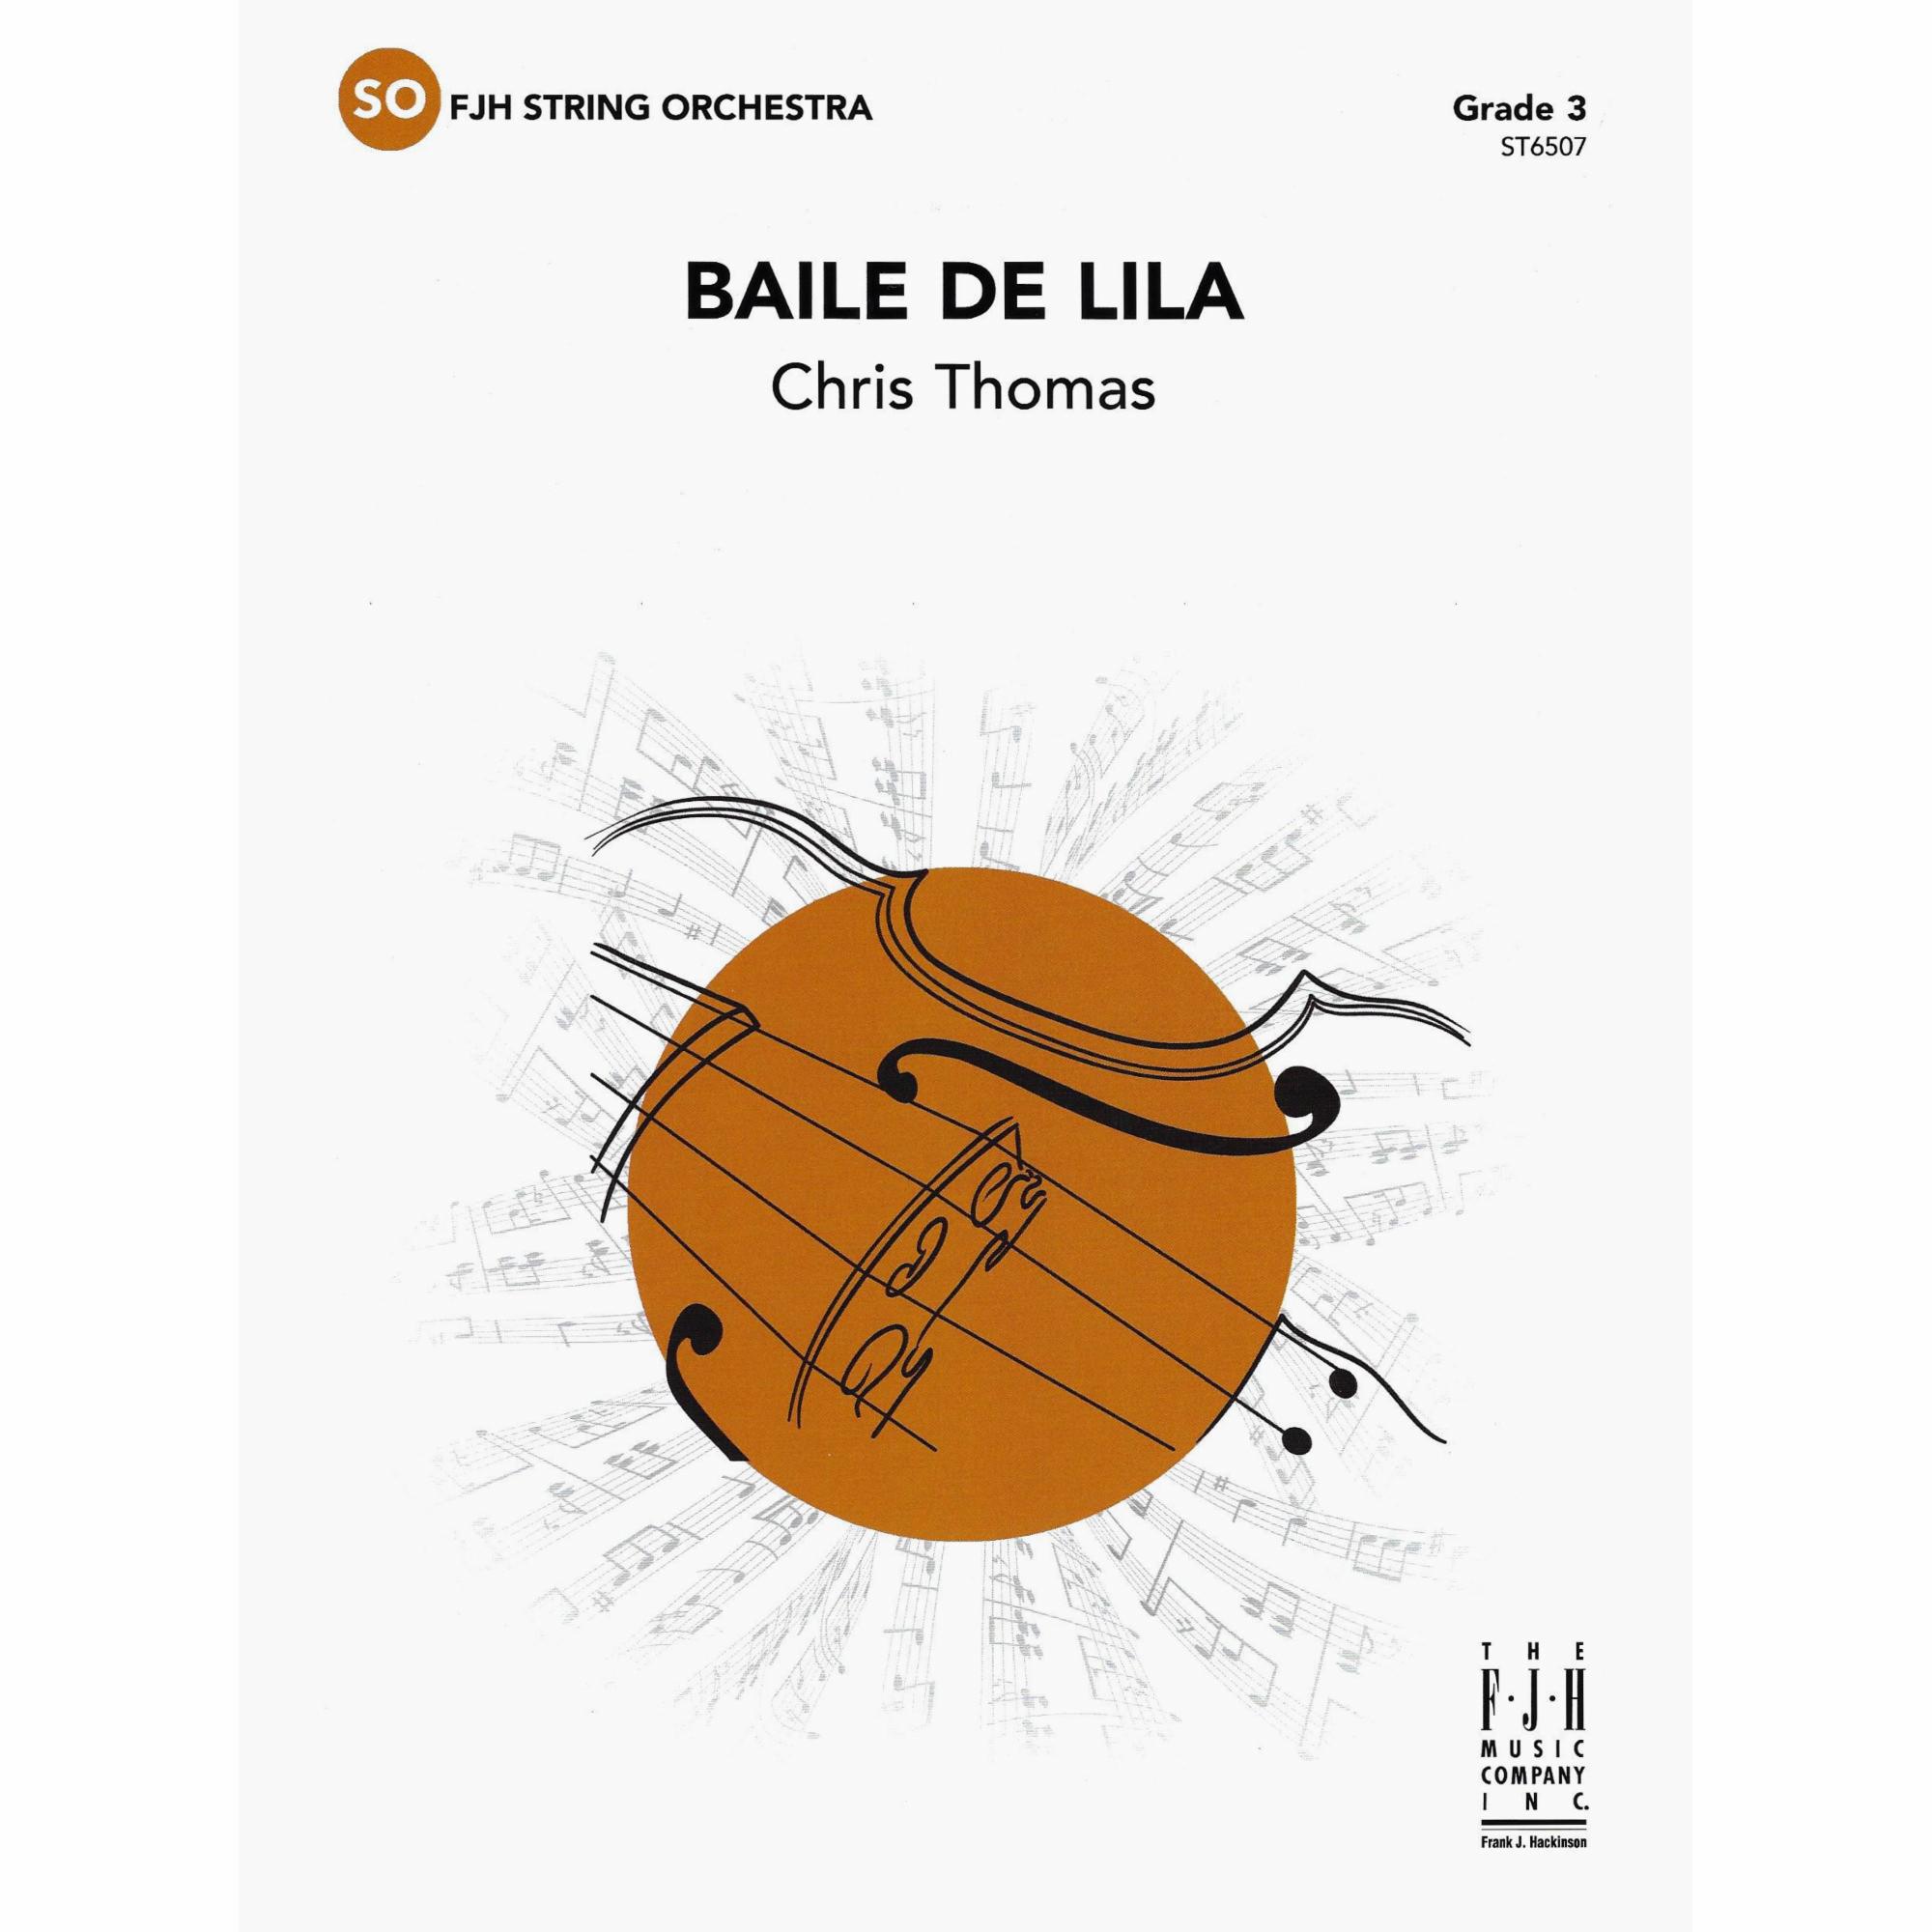 Baile de Lila for String Orchestra